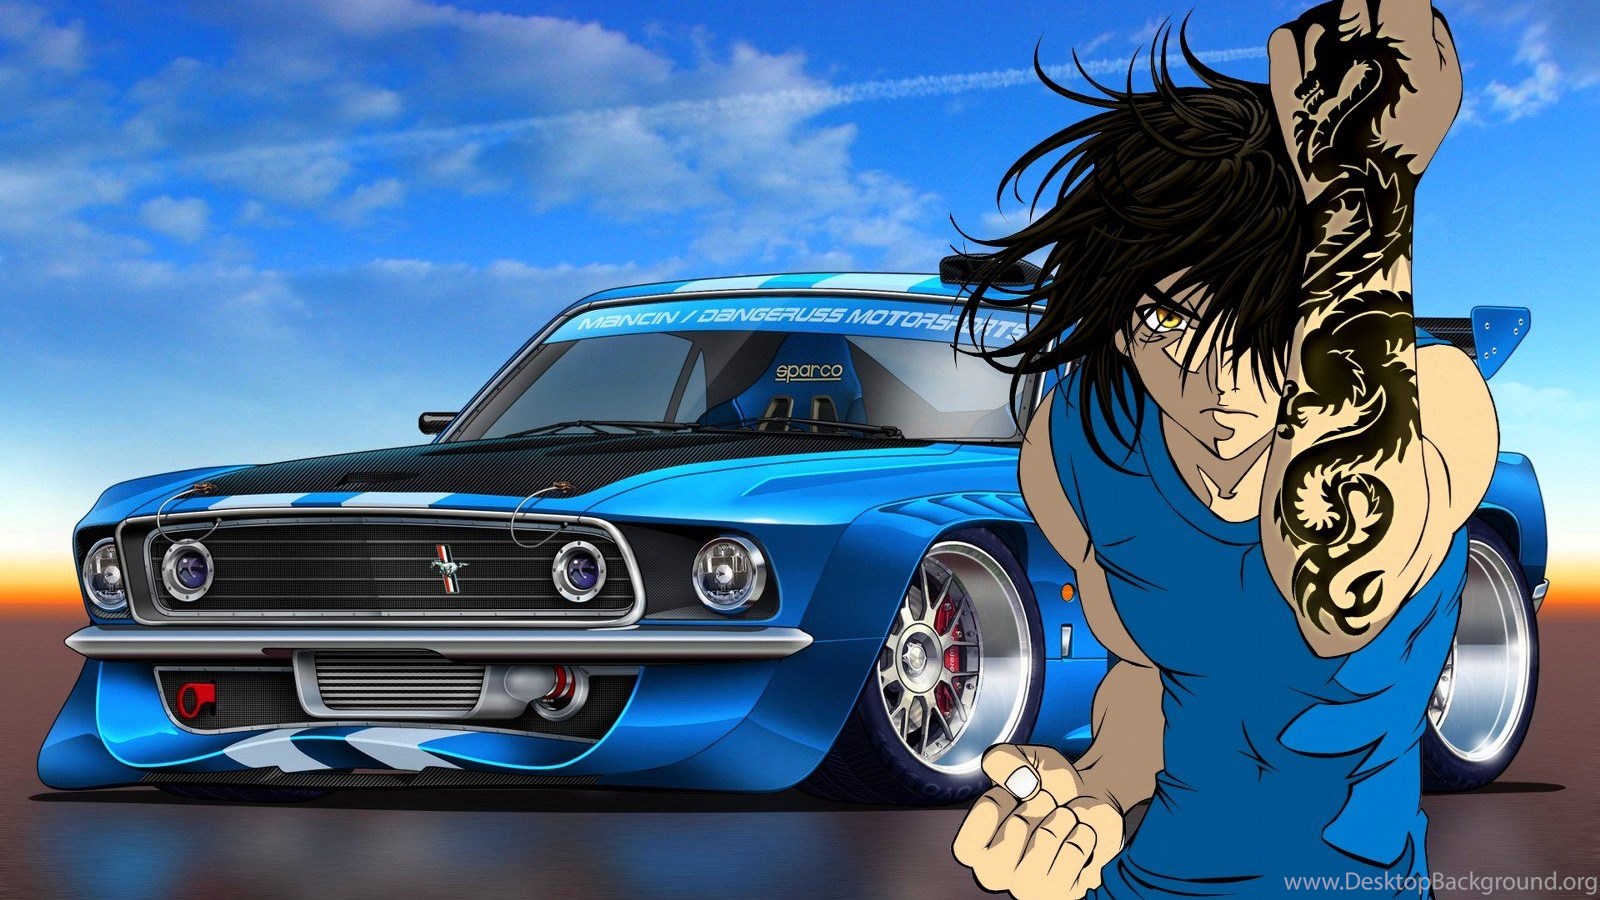 Boy And Racer Car Cartoon Desktop Background